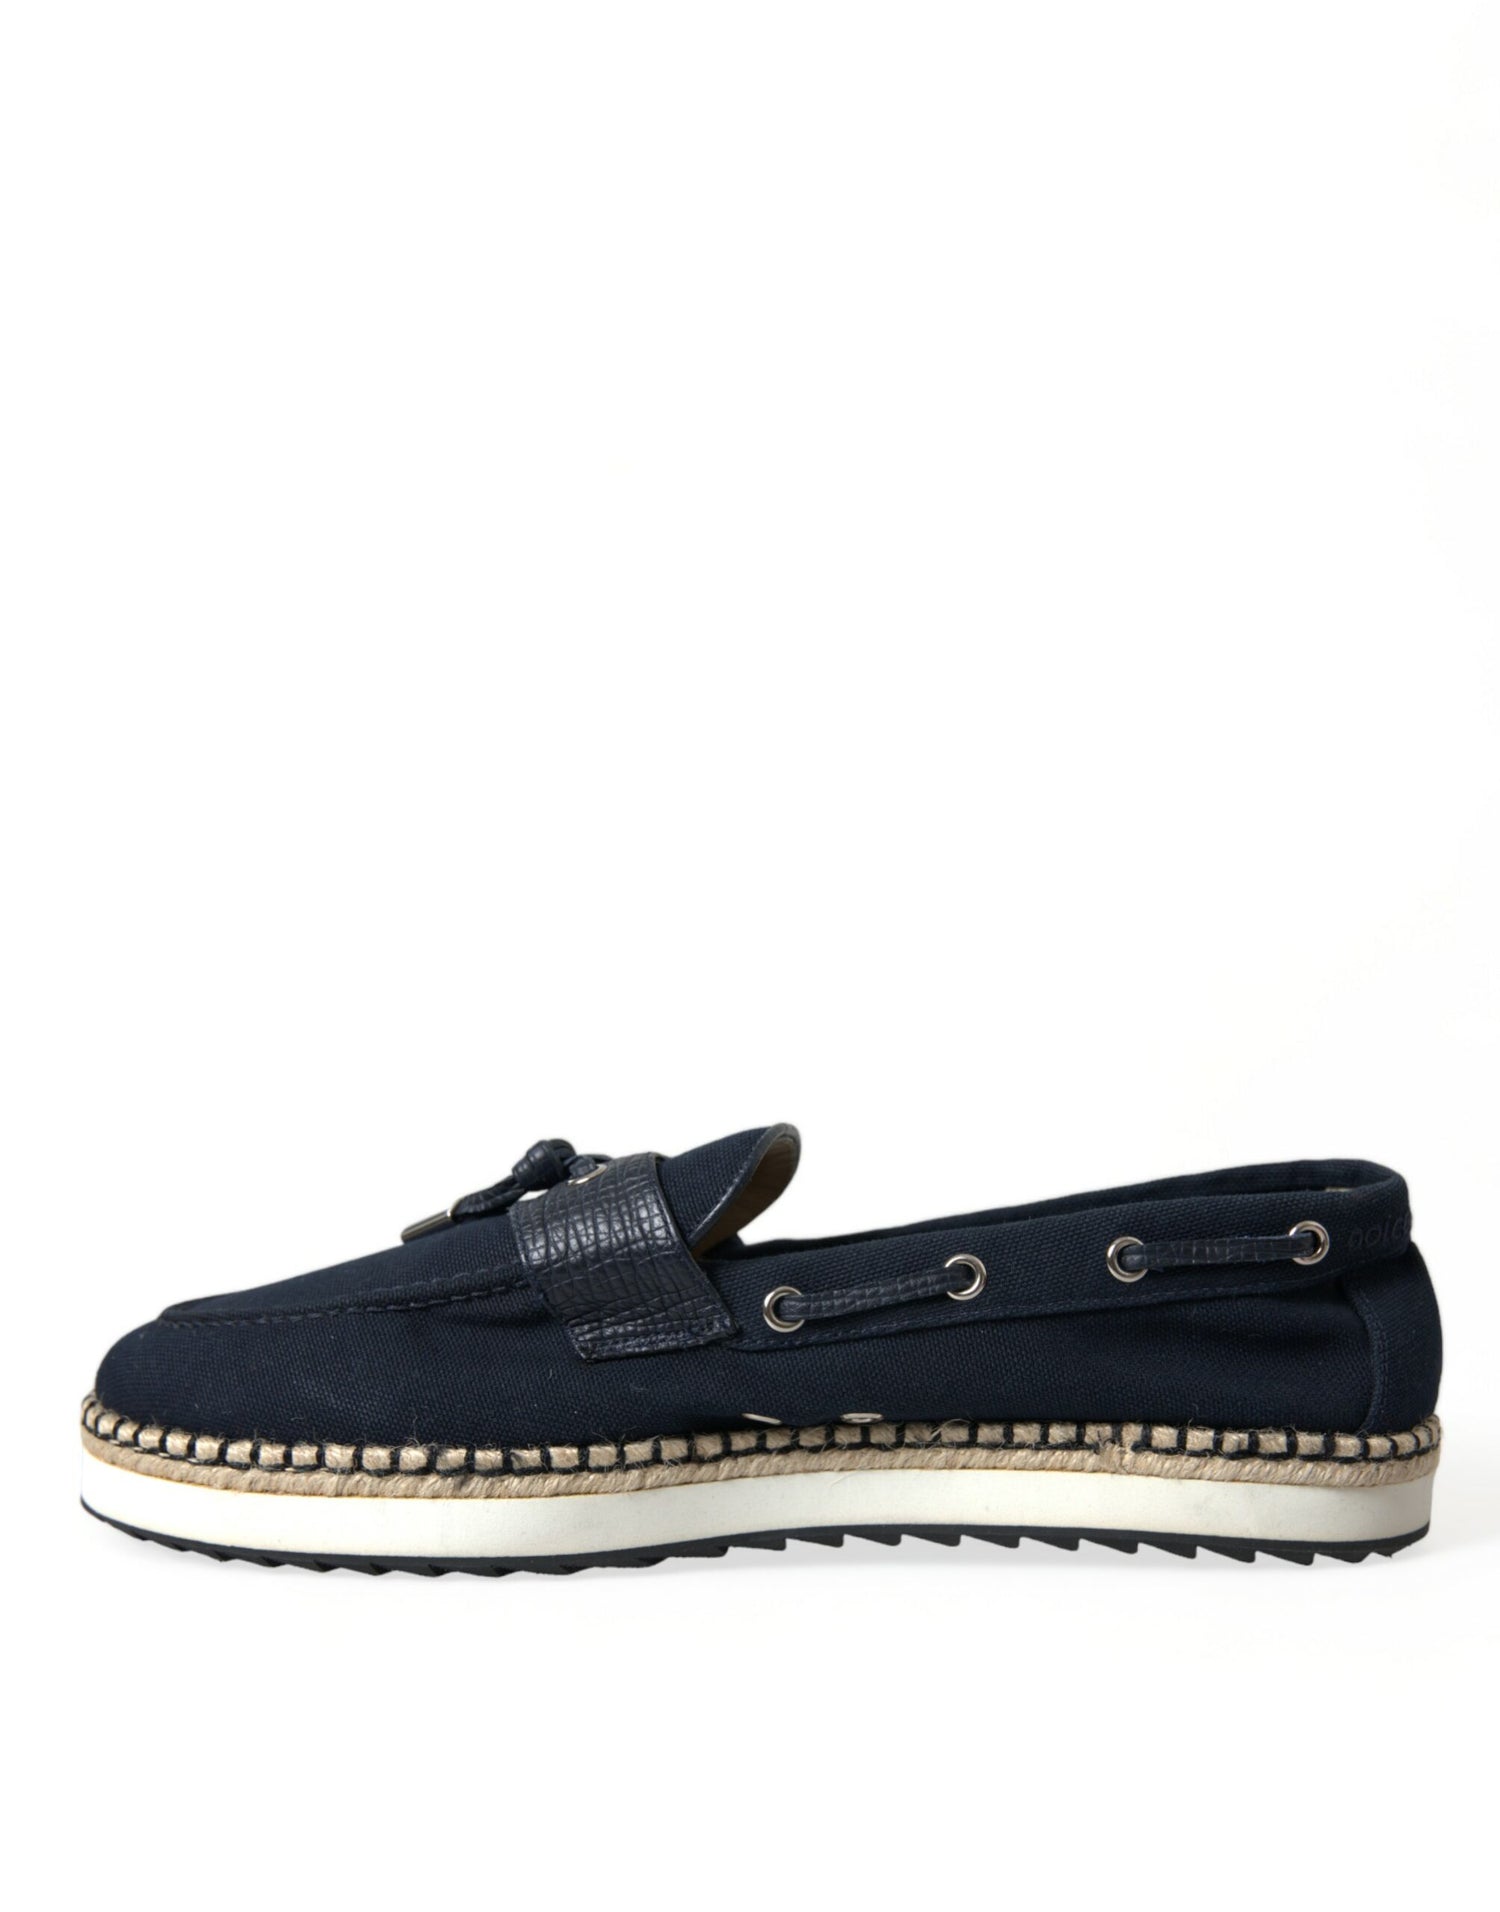 Dolce & Gabbana Navy Blue Slip On Men Moccasin Loafers Shoes - DEA STILOSA MILANO